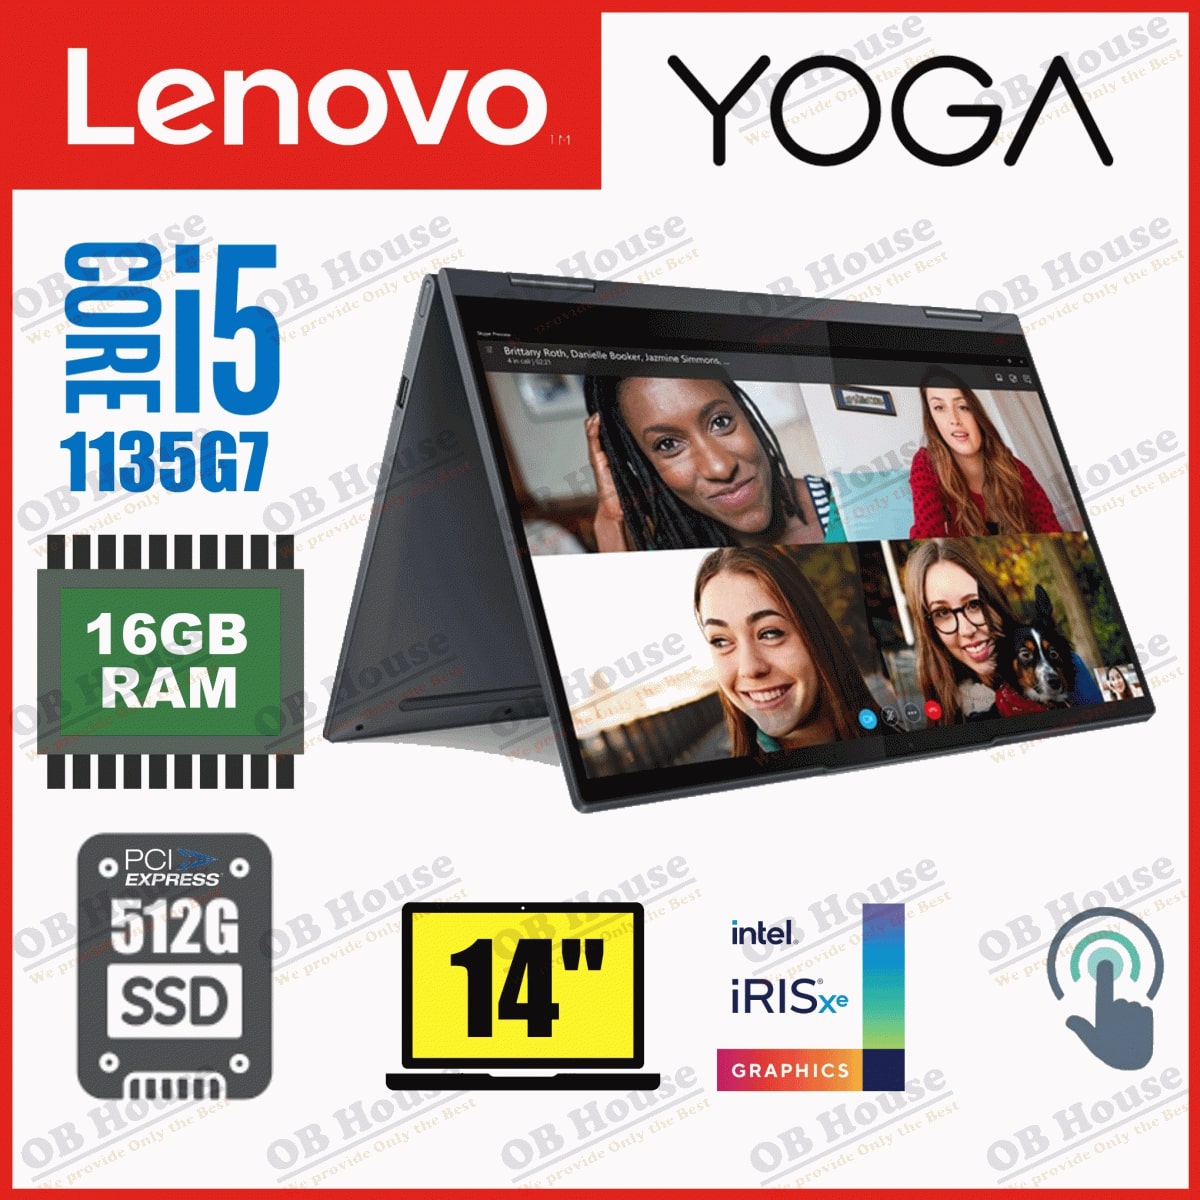 Yoga 7i 11代i5-1135G7 16GB 512GB SSD 2 合 1 筆記簿型電腦 (82BH001WHH) - 極新開箱機